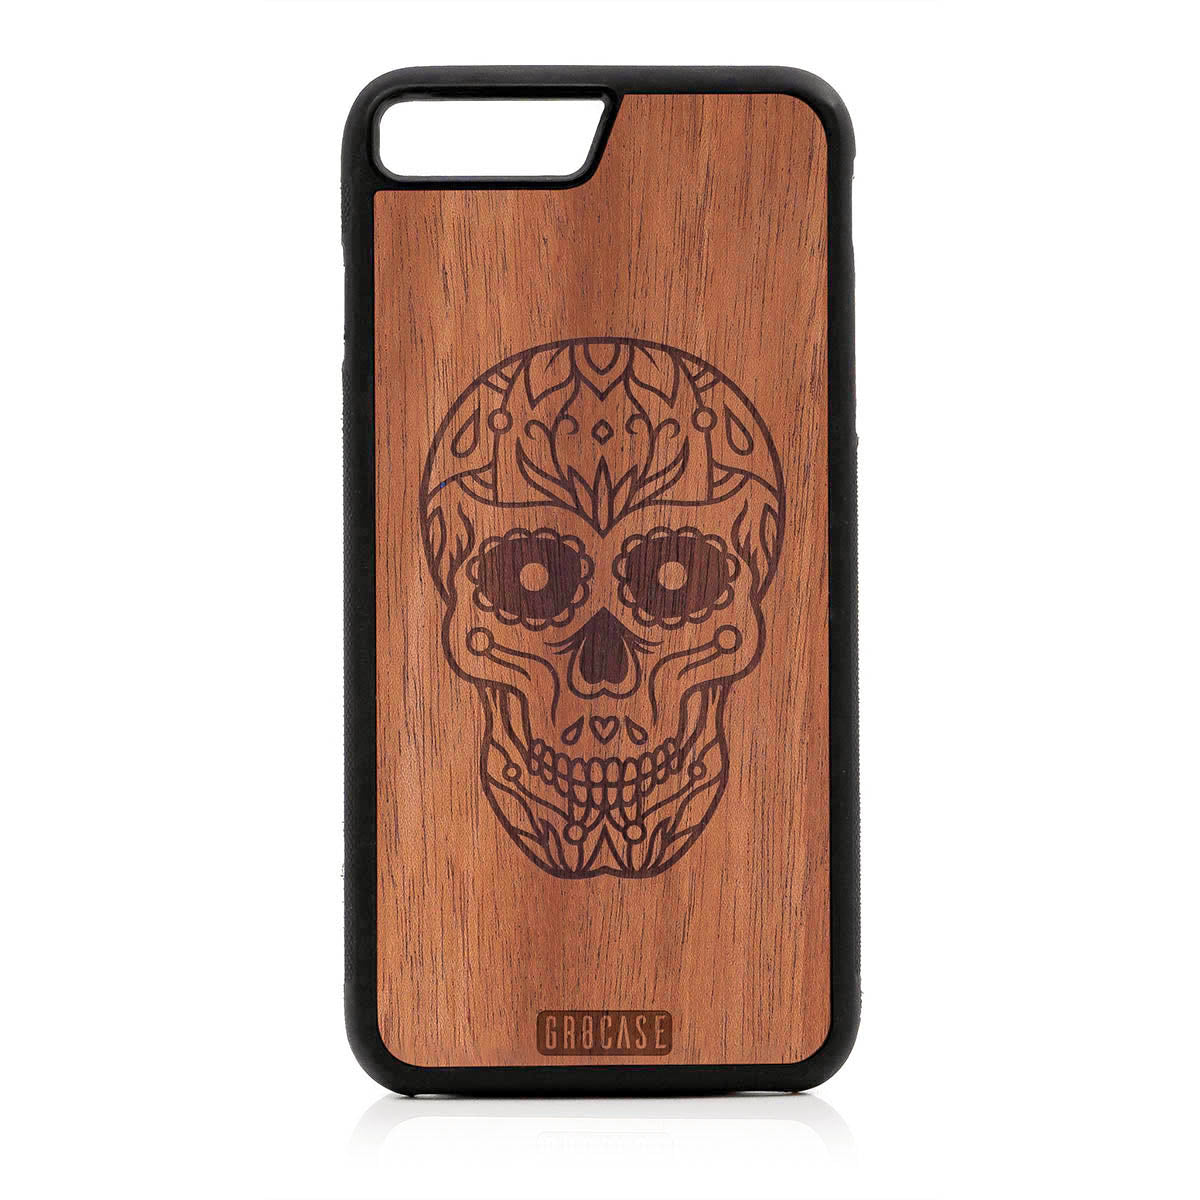 Sugar Skull Design Wood Case For iPhone 7 Plus / 8 Plus by GR8CASE